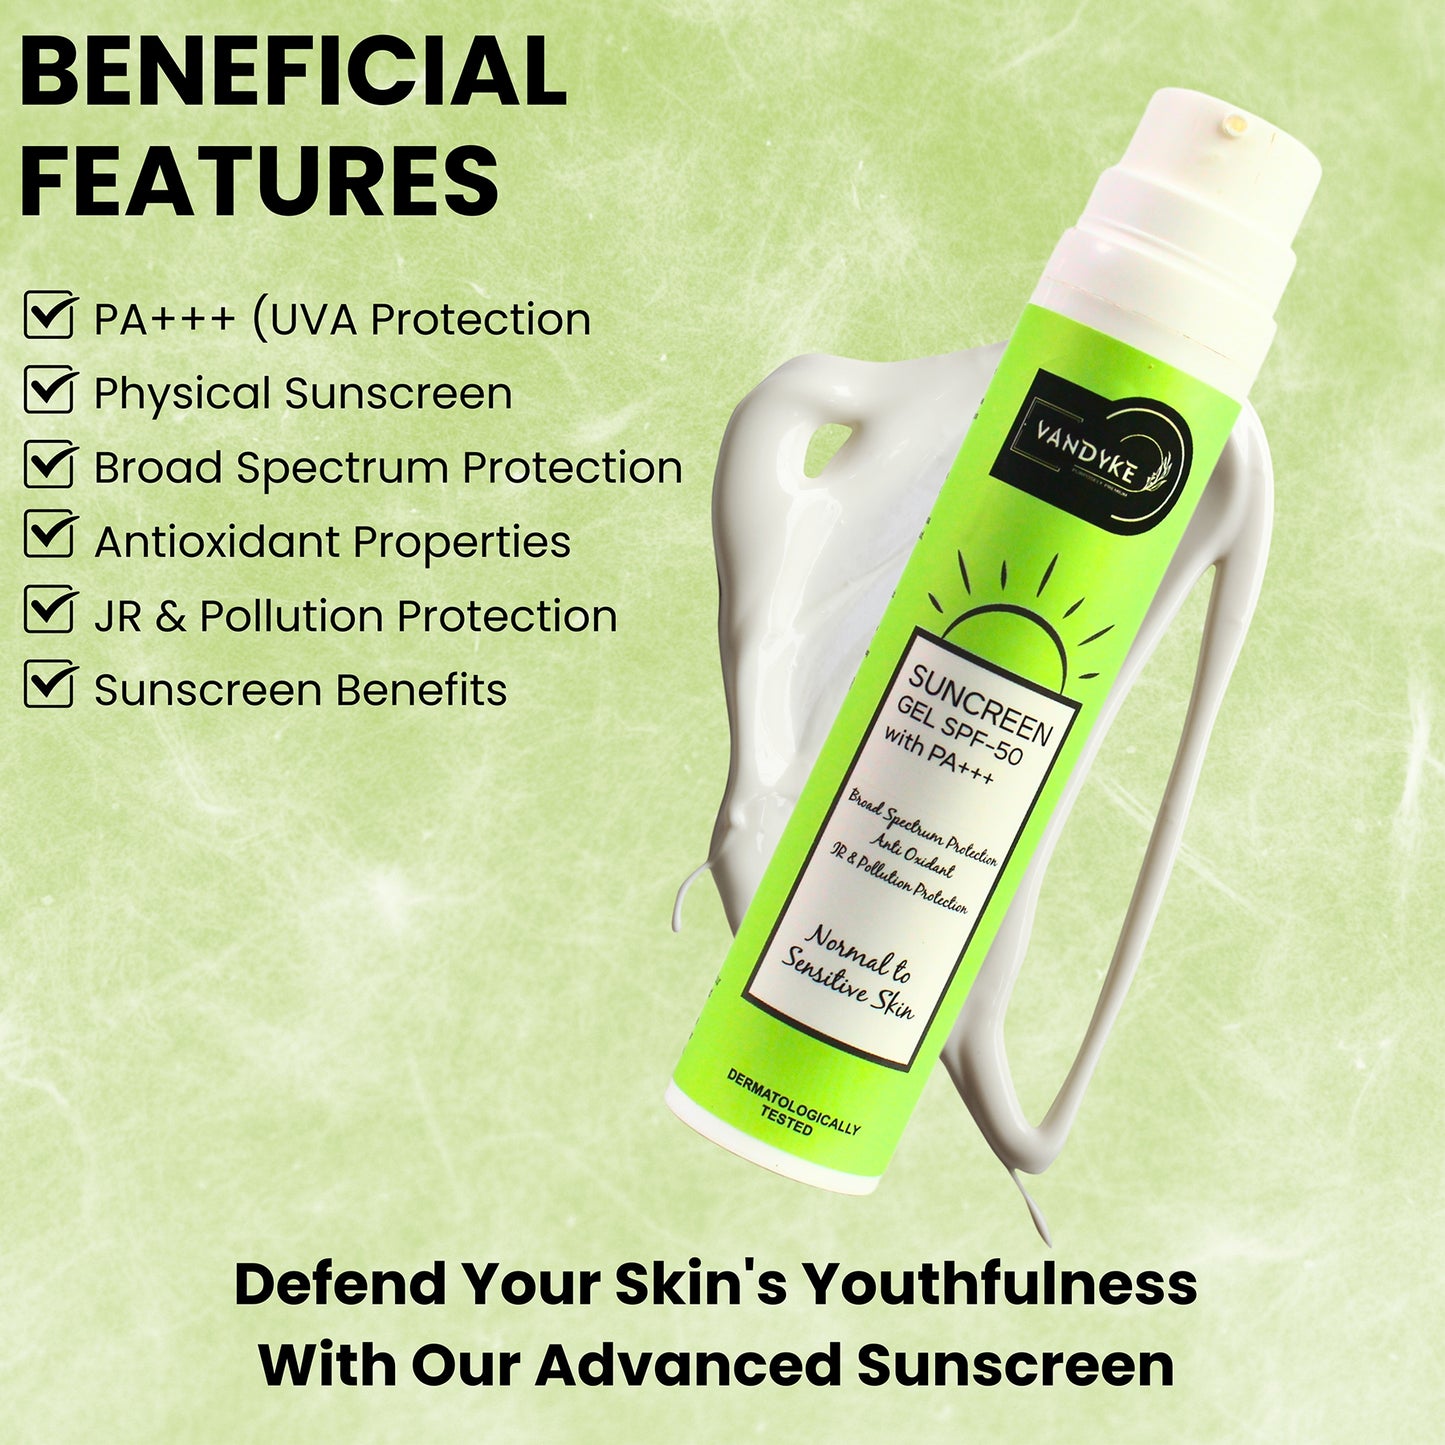 Vandyke Oxide Zinc Sunscreen Gel Spf 50 with PA+++ Broad Spectrum Protection, 50gm